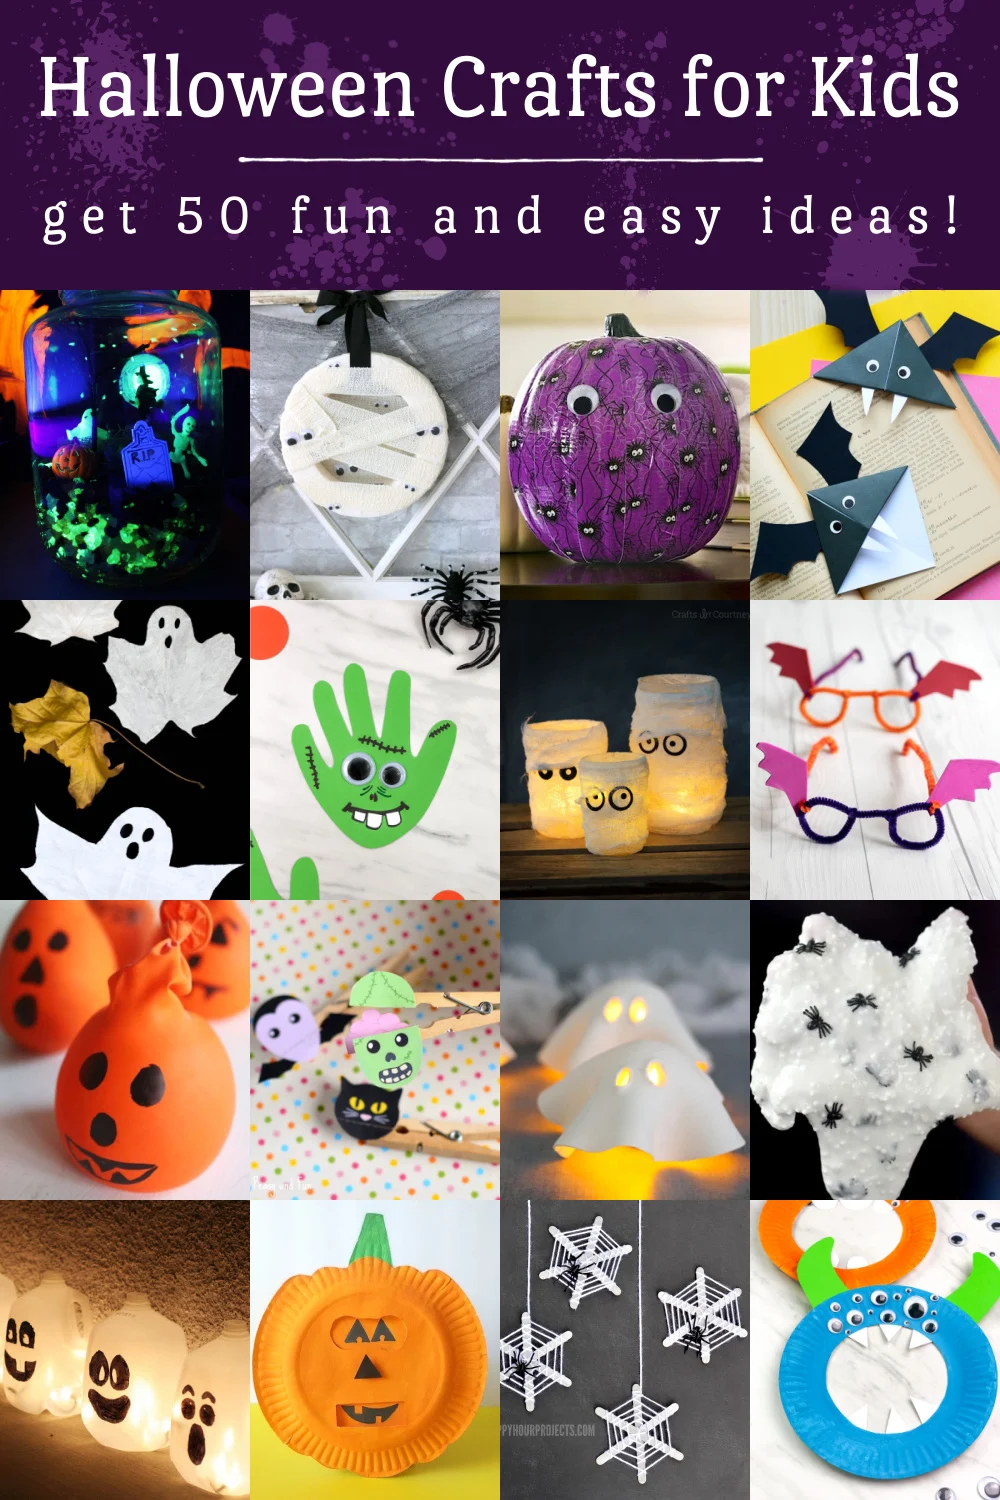 10 Spooky DIY Halloween Crafts for Kids 6. Incorporating STEM in DIY Halloween Crafts